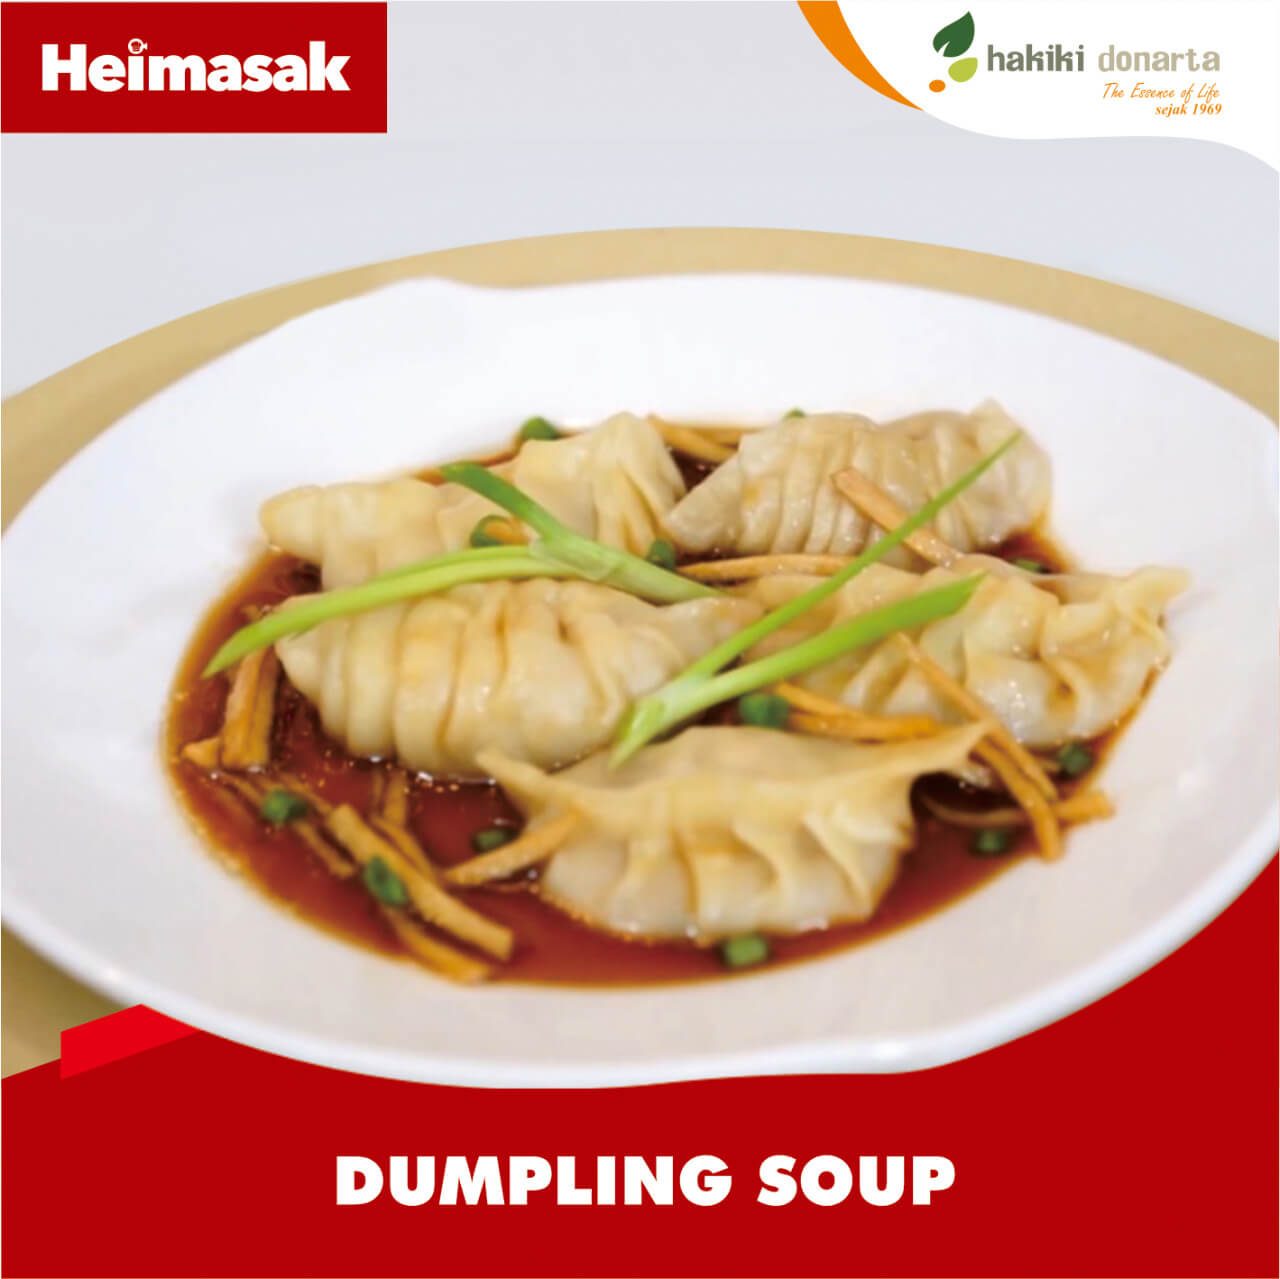 Heimasak – Hakiki Donarta – Dumpling Soup